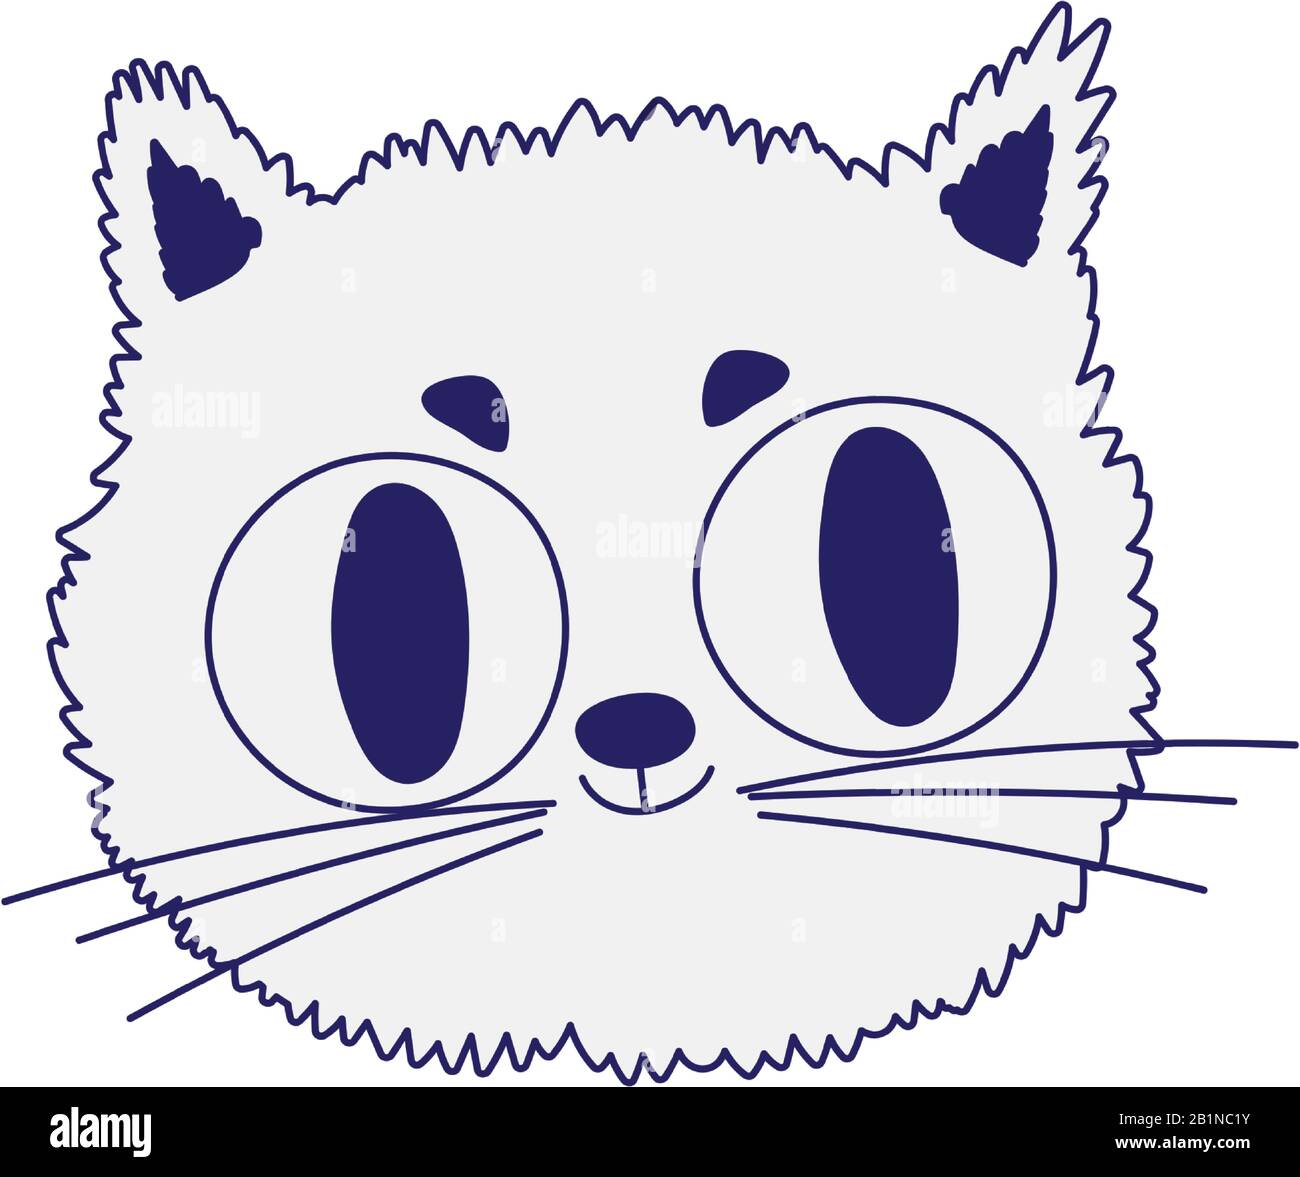 Cute cat face feline cartoon animal icon Vector Image